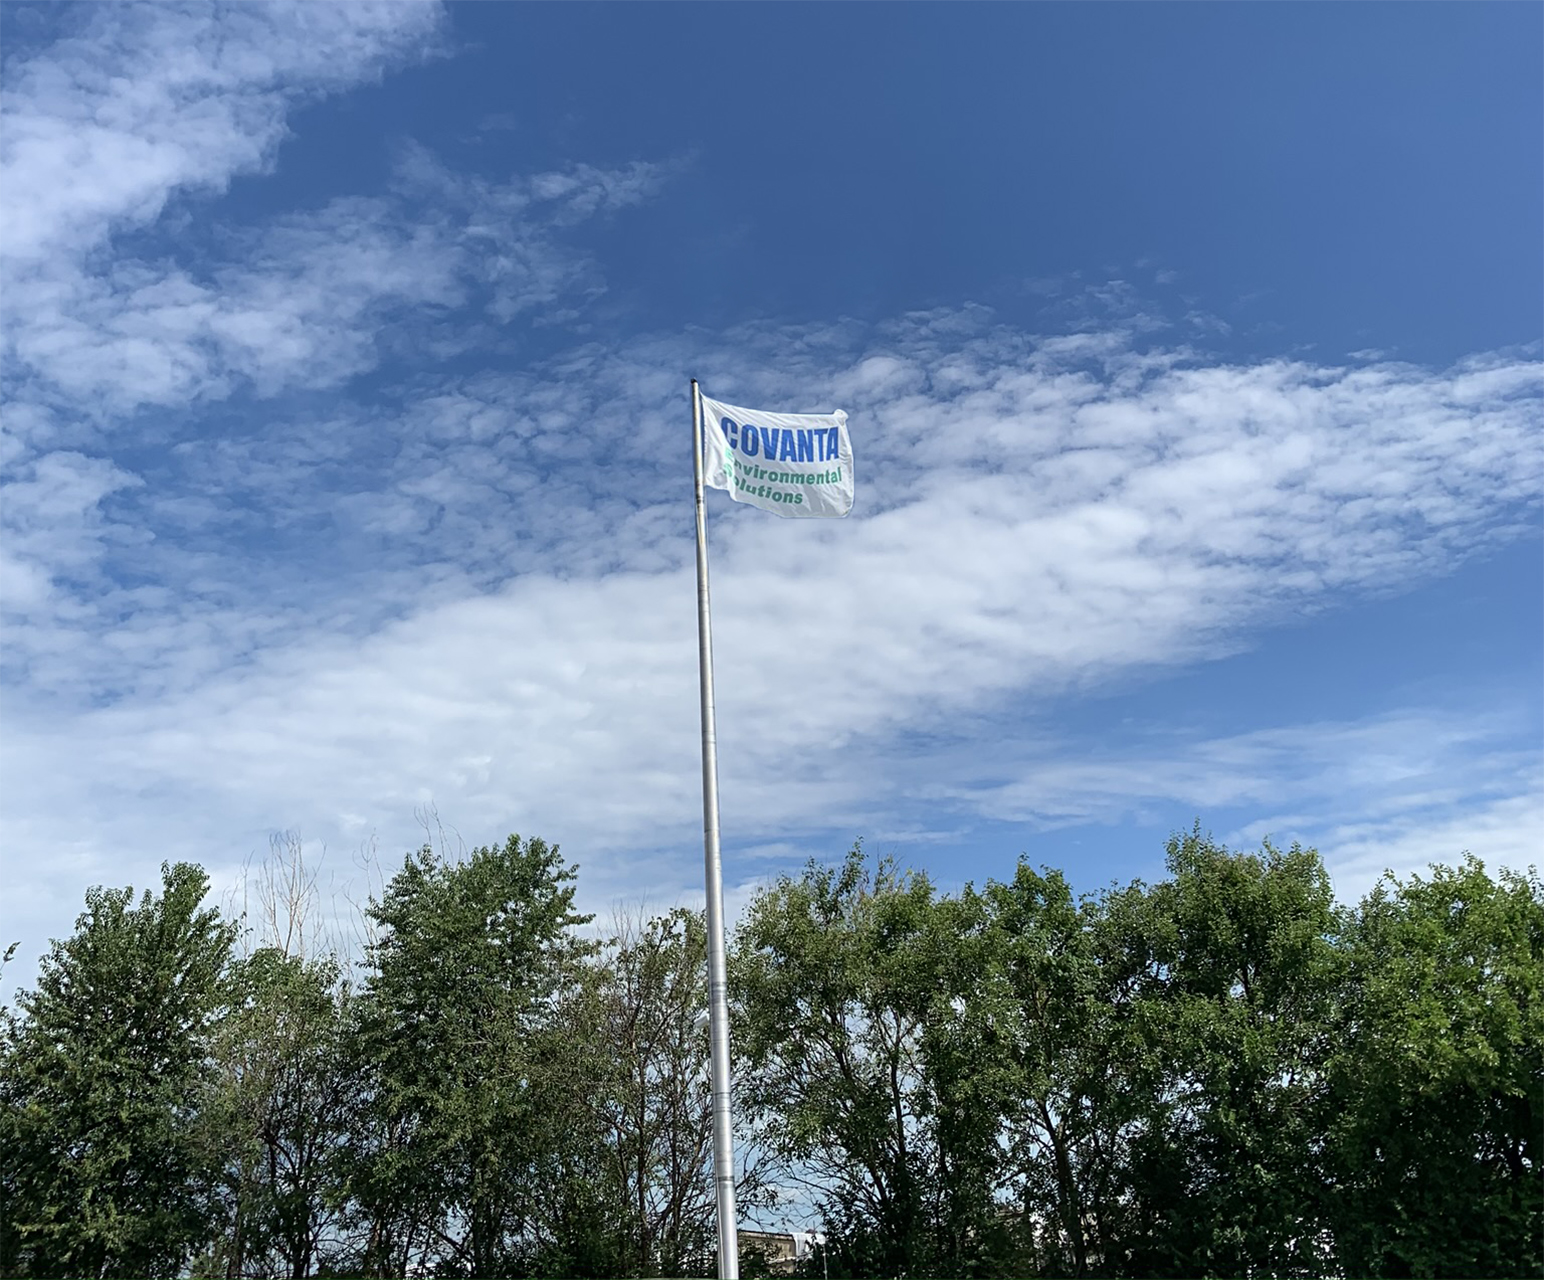 Covanta Environmental Solutions flag waving on blue sky above the tree line